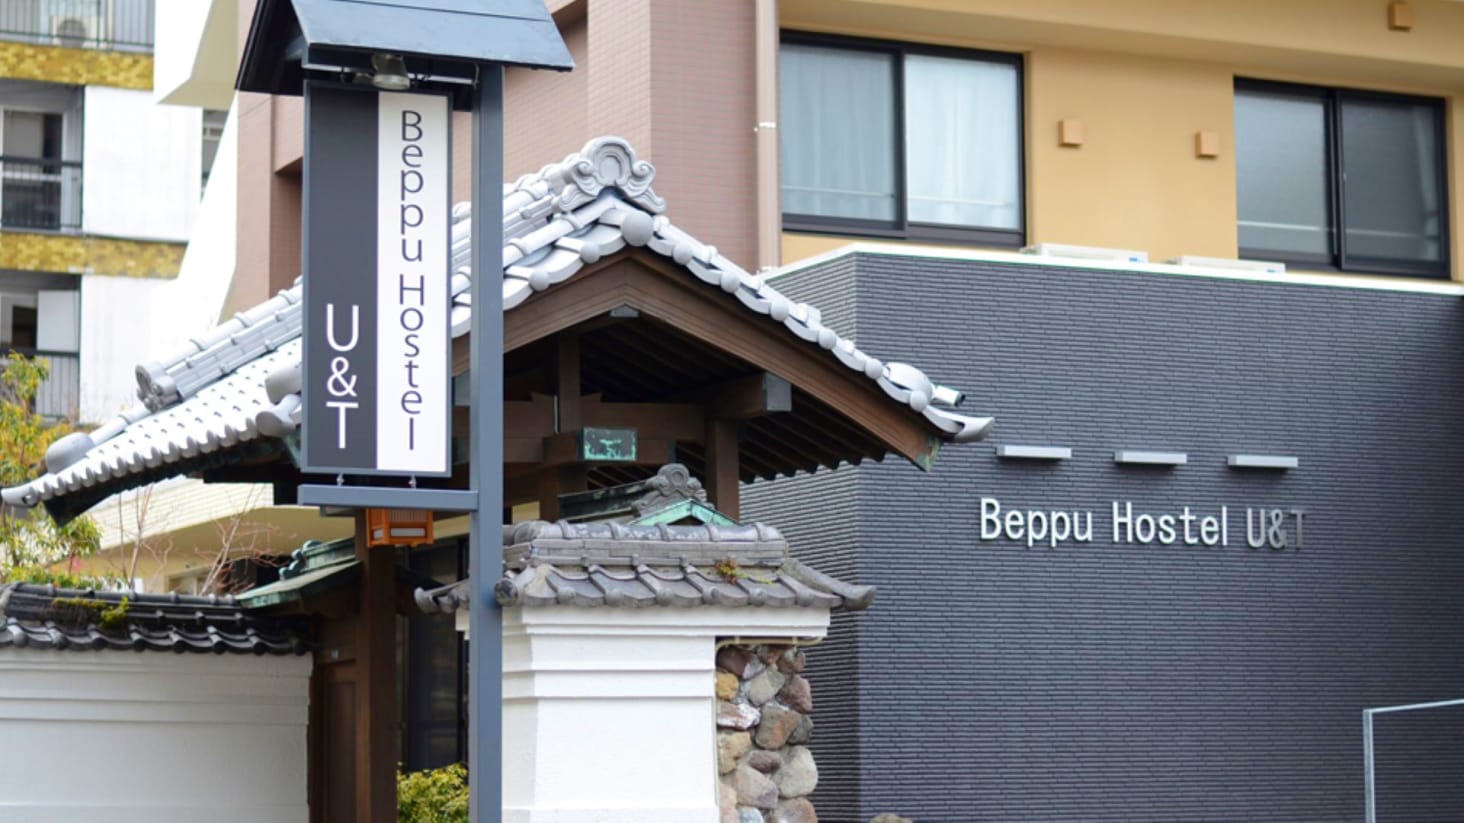 Beppu Hostel U&T Hostel, Resonac Dome Oita